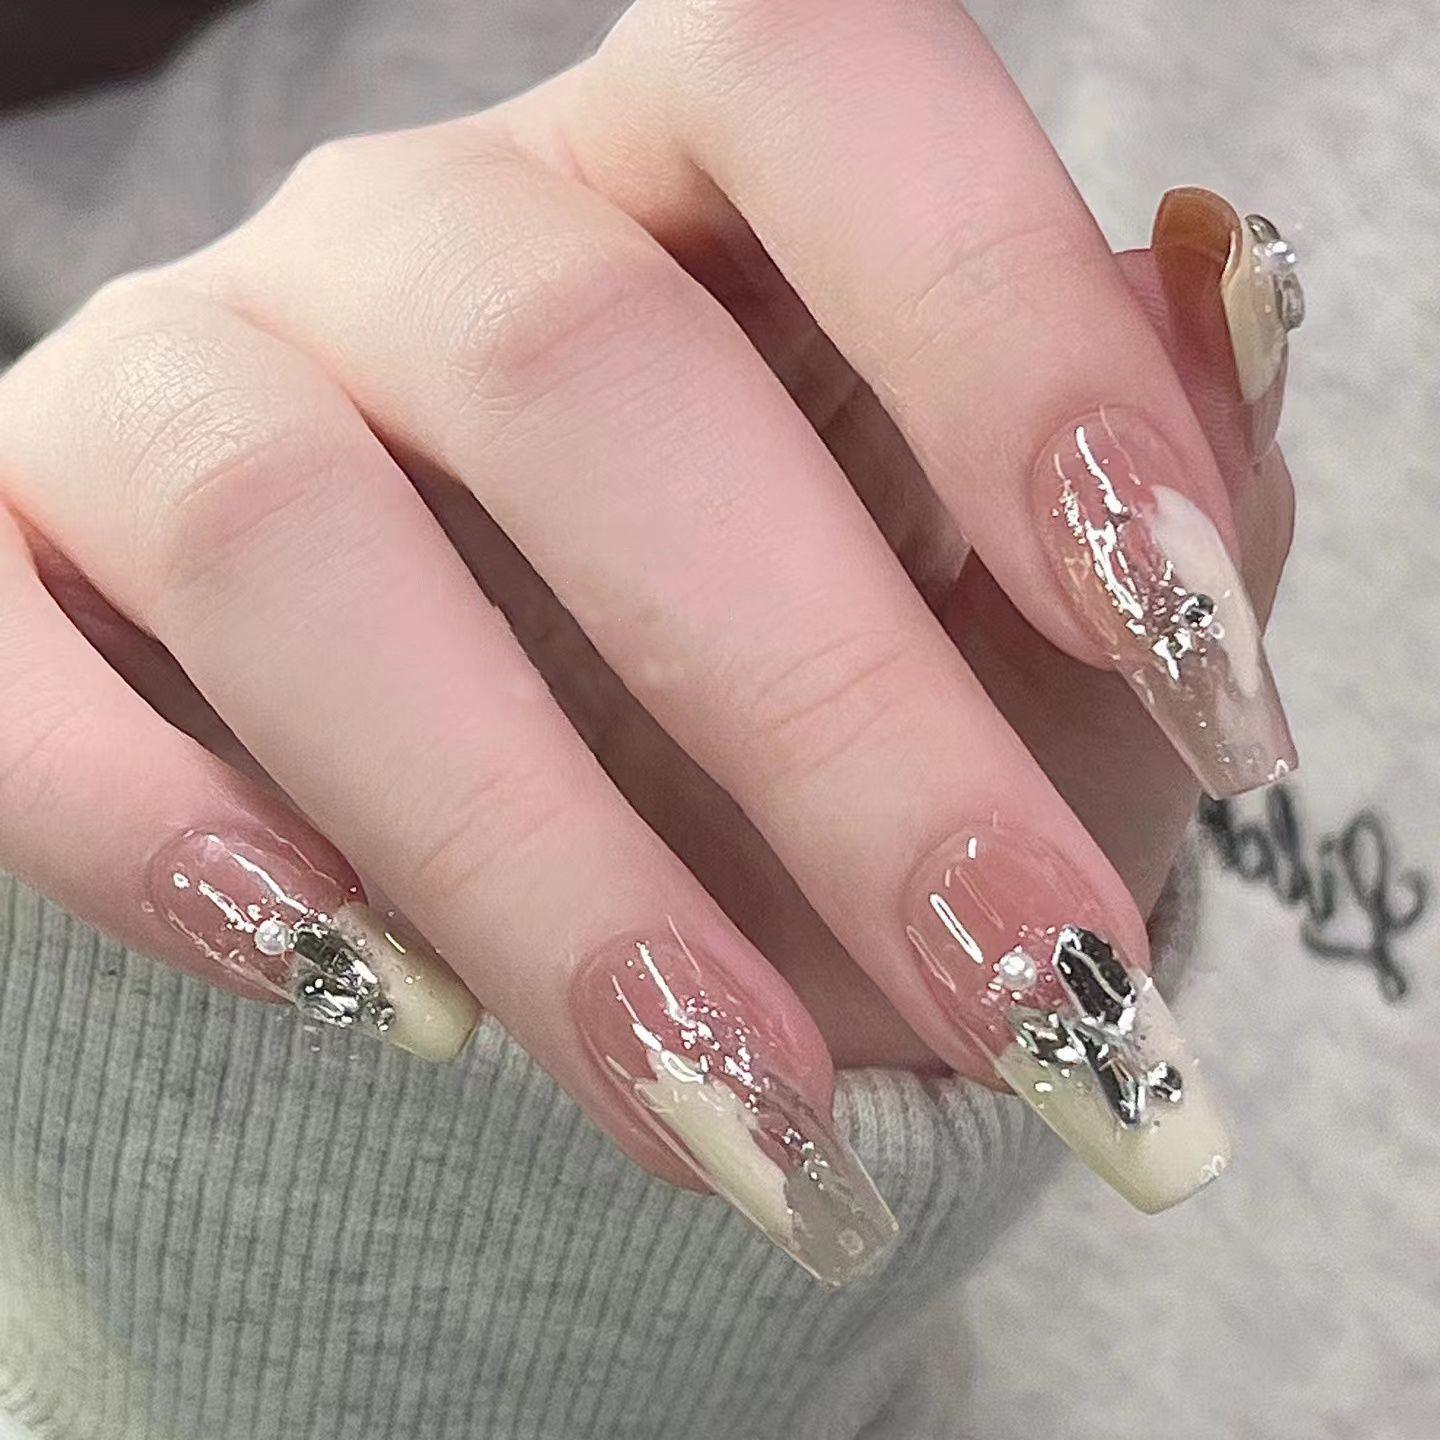 Cream Gilt French | False Nails | diamond nails, French manicure, gold nails, long-lasting nails, luxury false nails, mirrored powder nails, removable nails", special occasion nails, wedding nails | SHOPQAQ